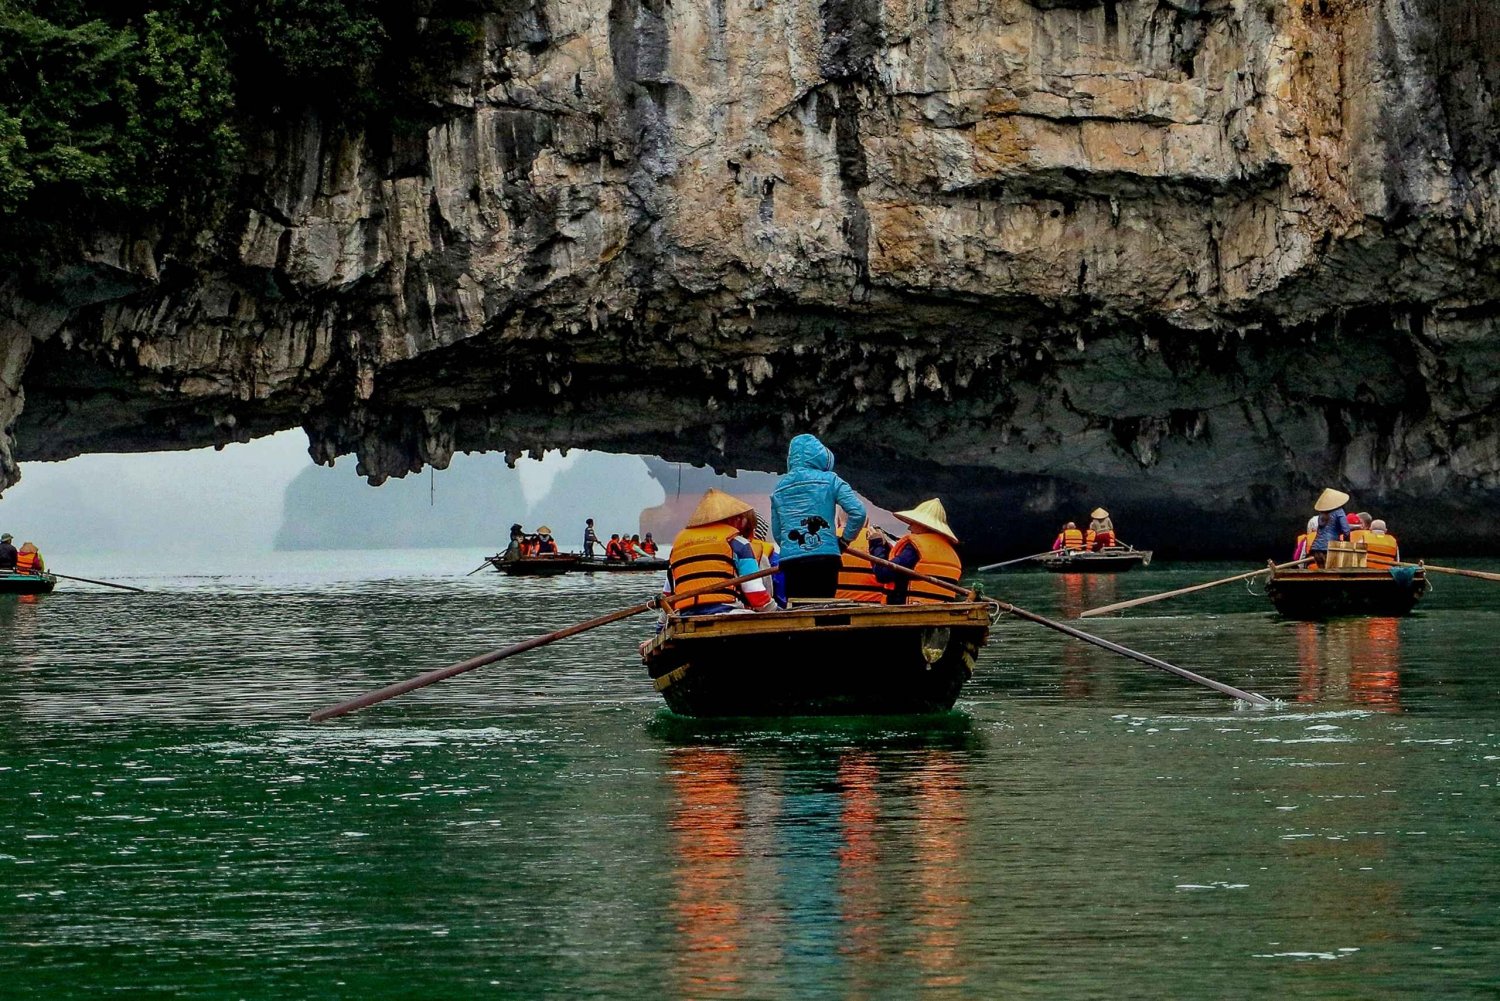 Hanoi: 1-Day Ha Long Bay Cruise/Titop island & Luon Cave